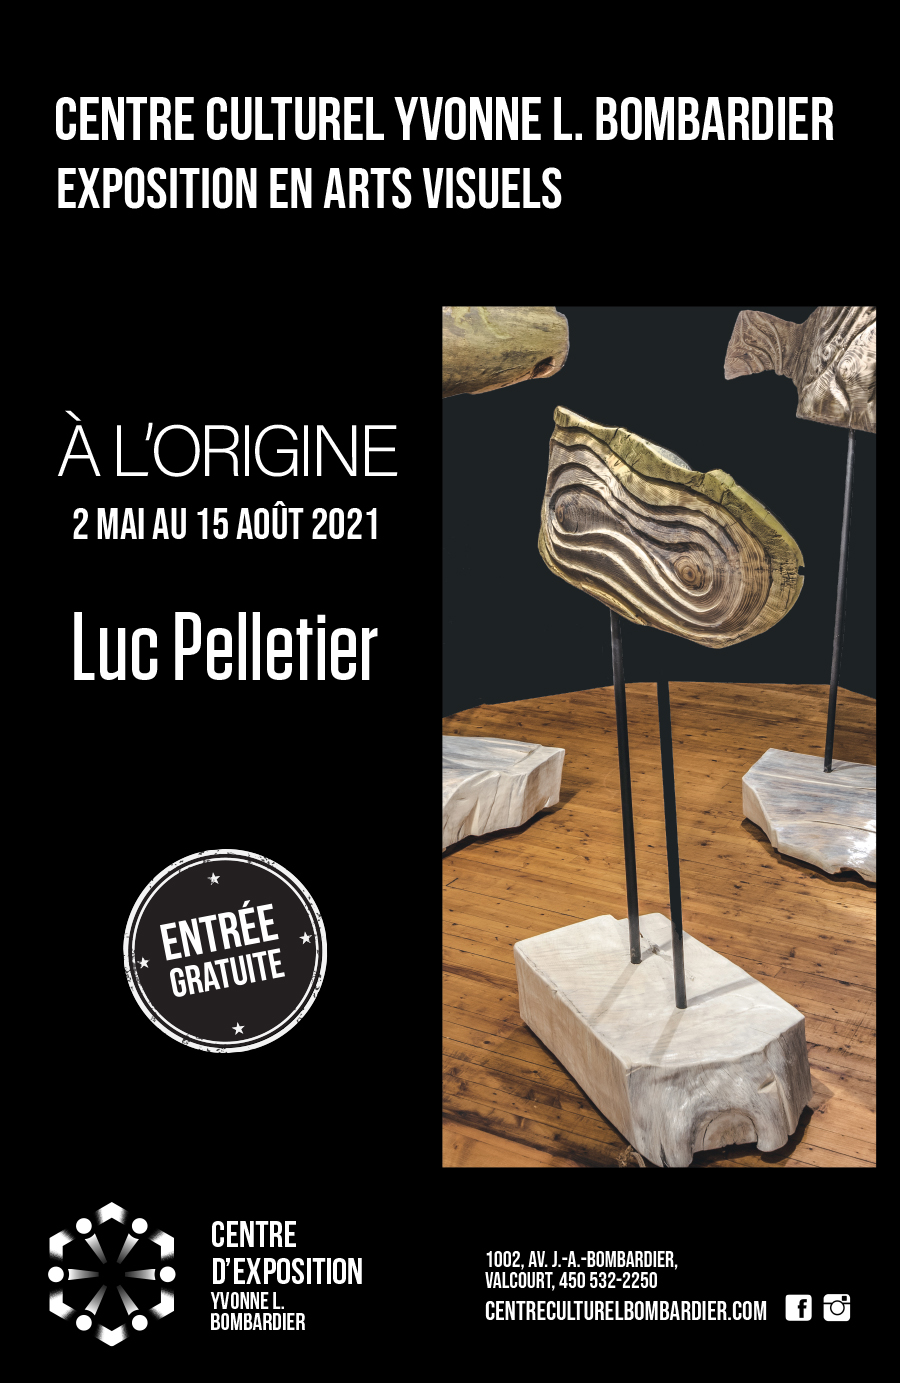 Luc Pelletier